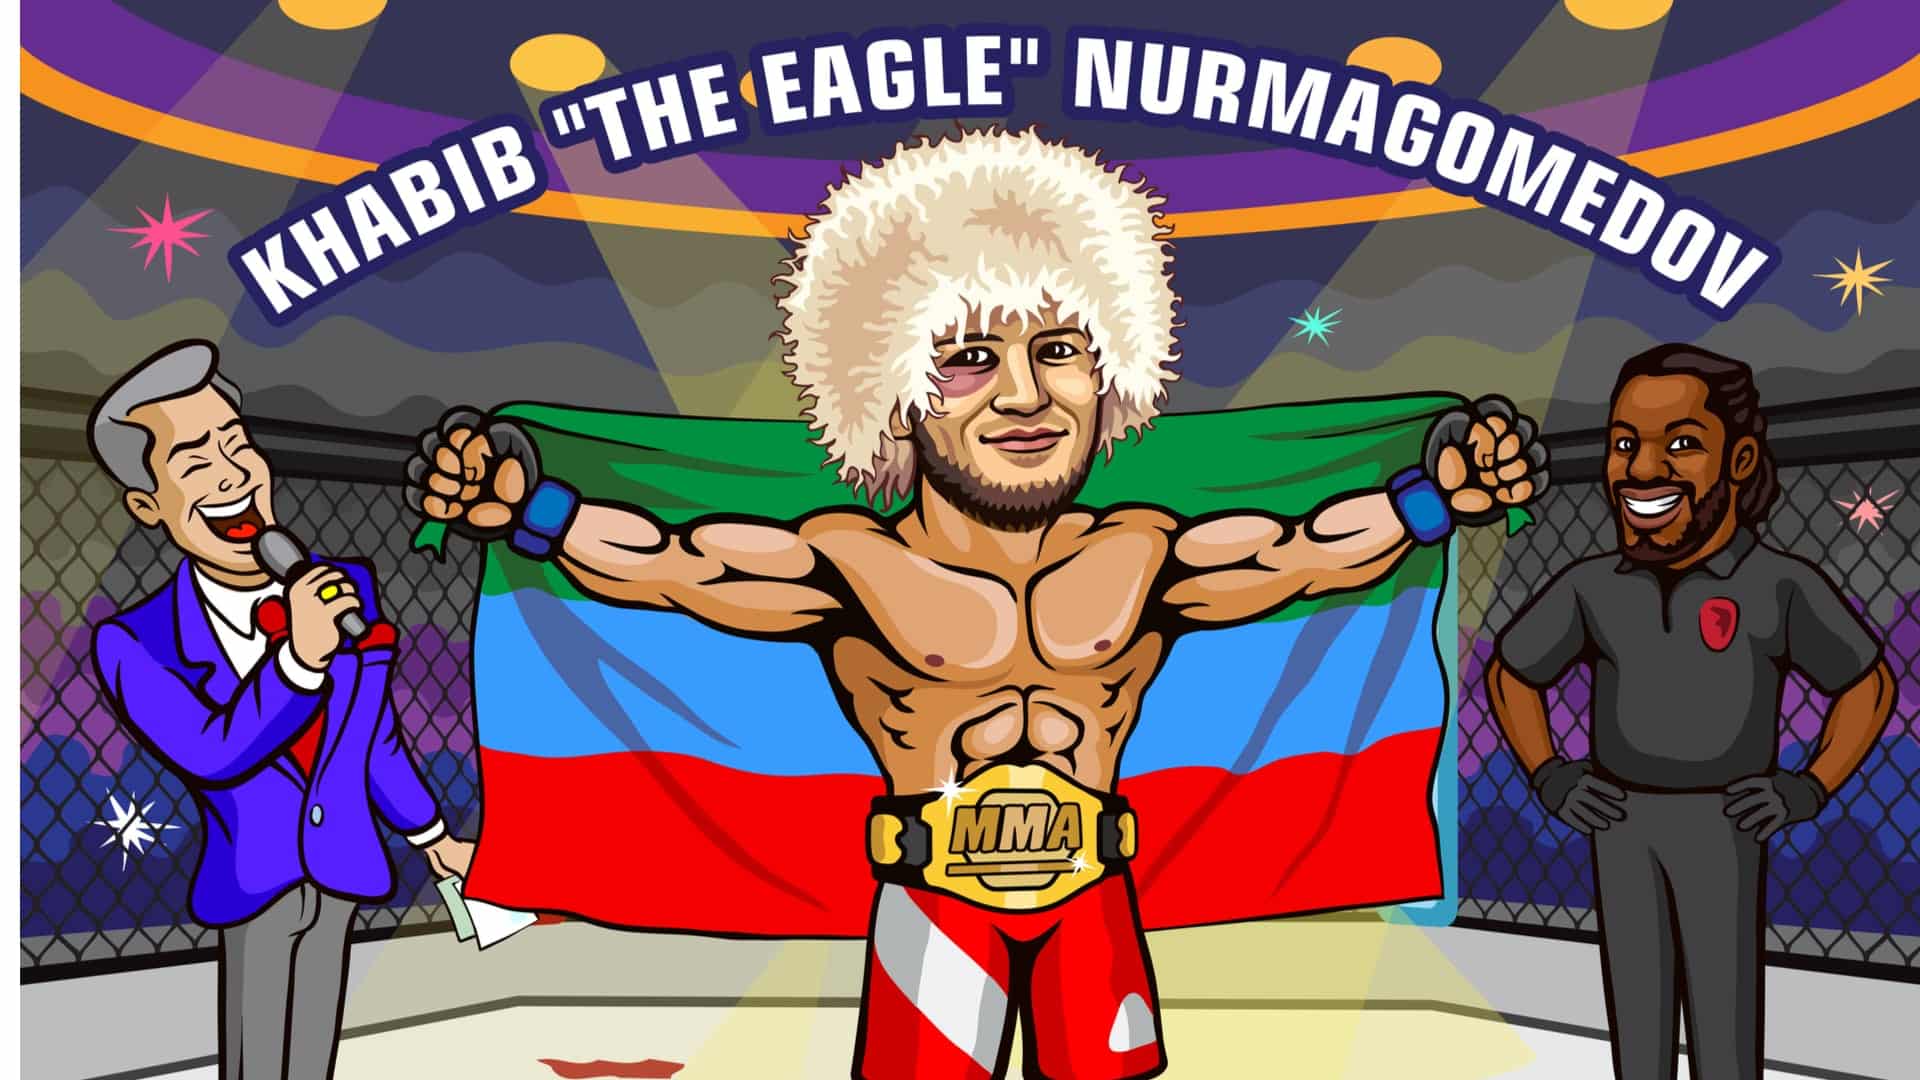 MMA star Khabib Nurmagomedov has entered the world of cryptocurrencies